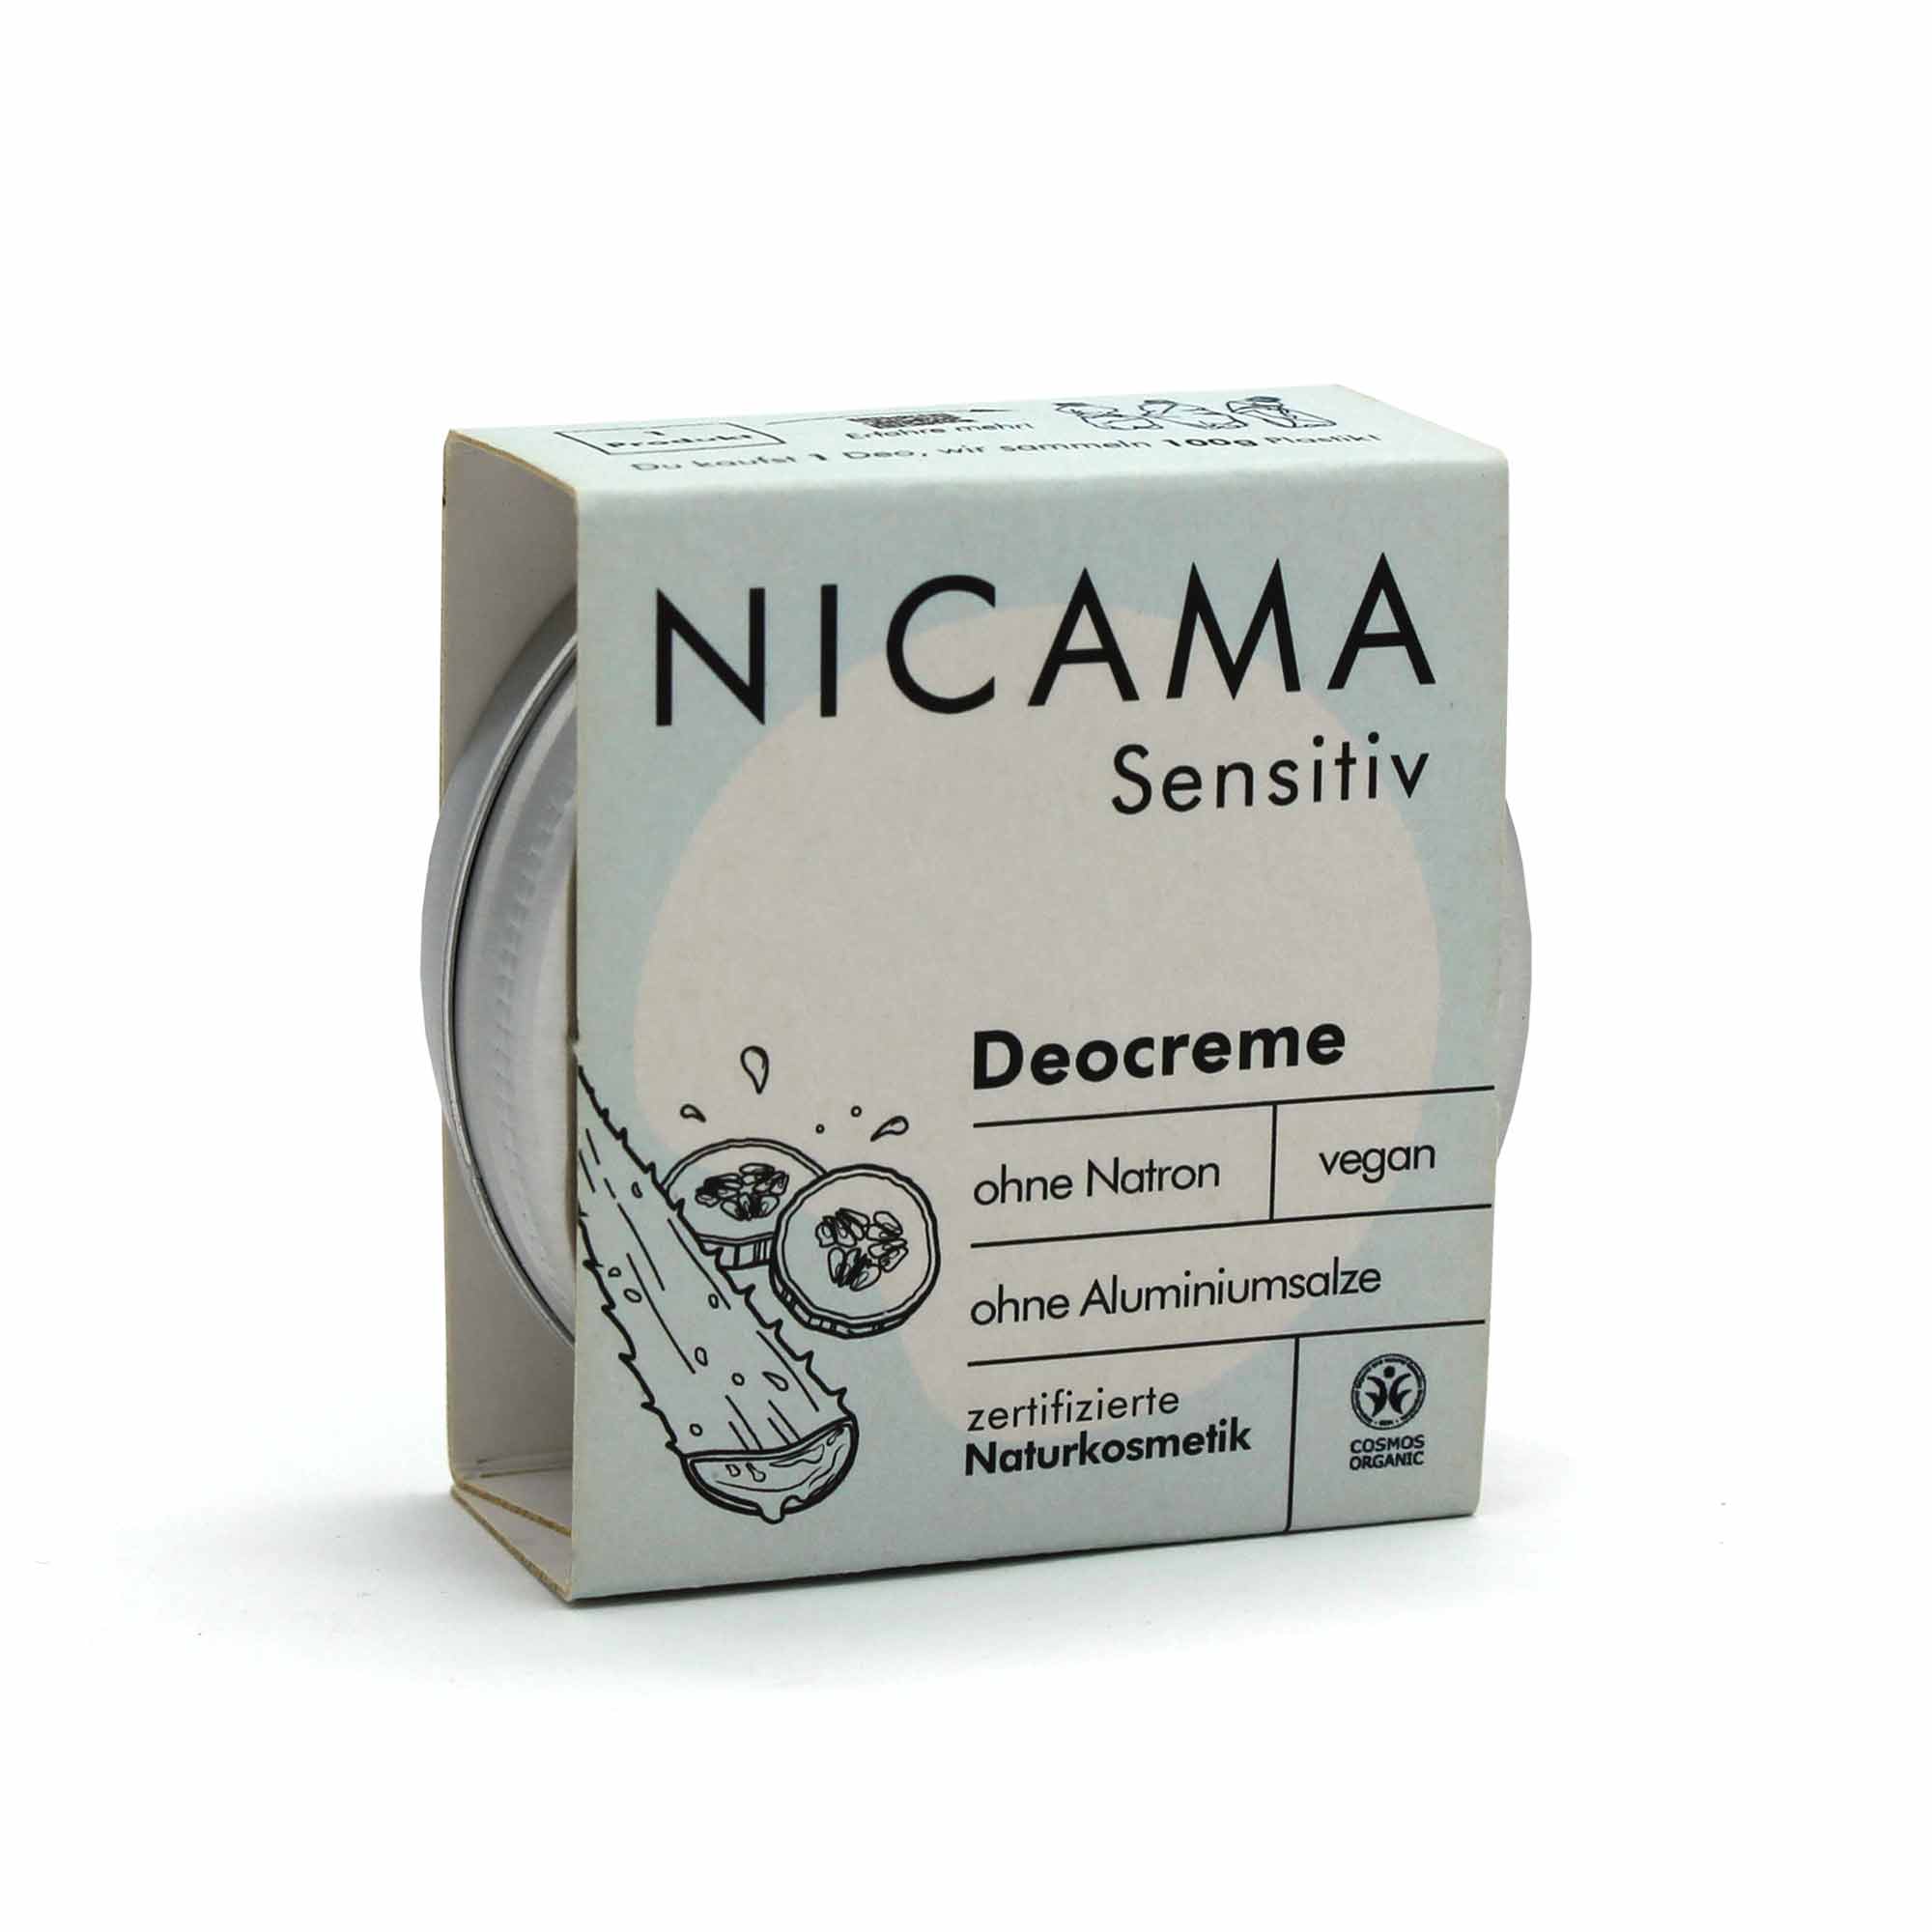 NICAMA Deocreme Sensitiv 50 g